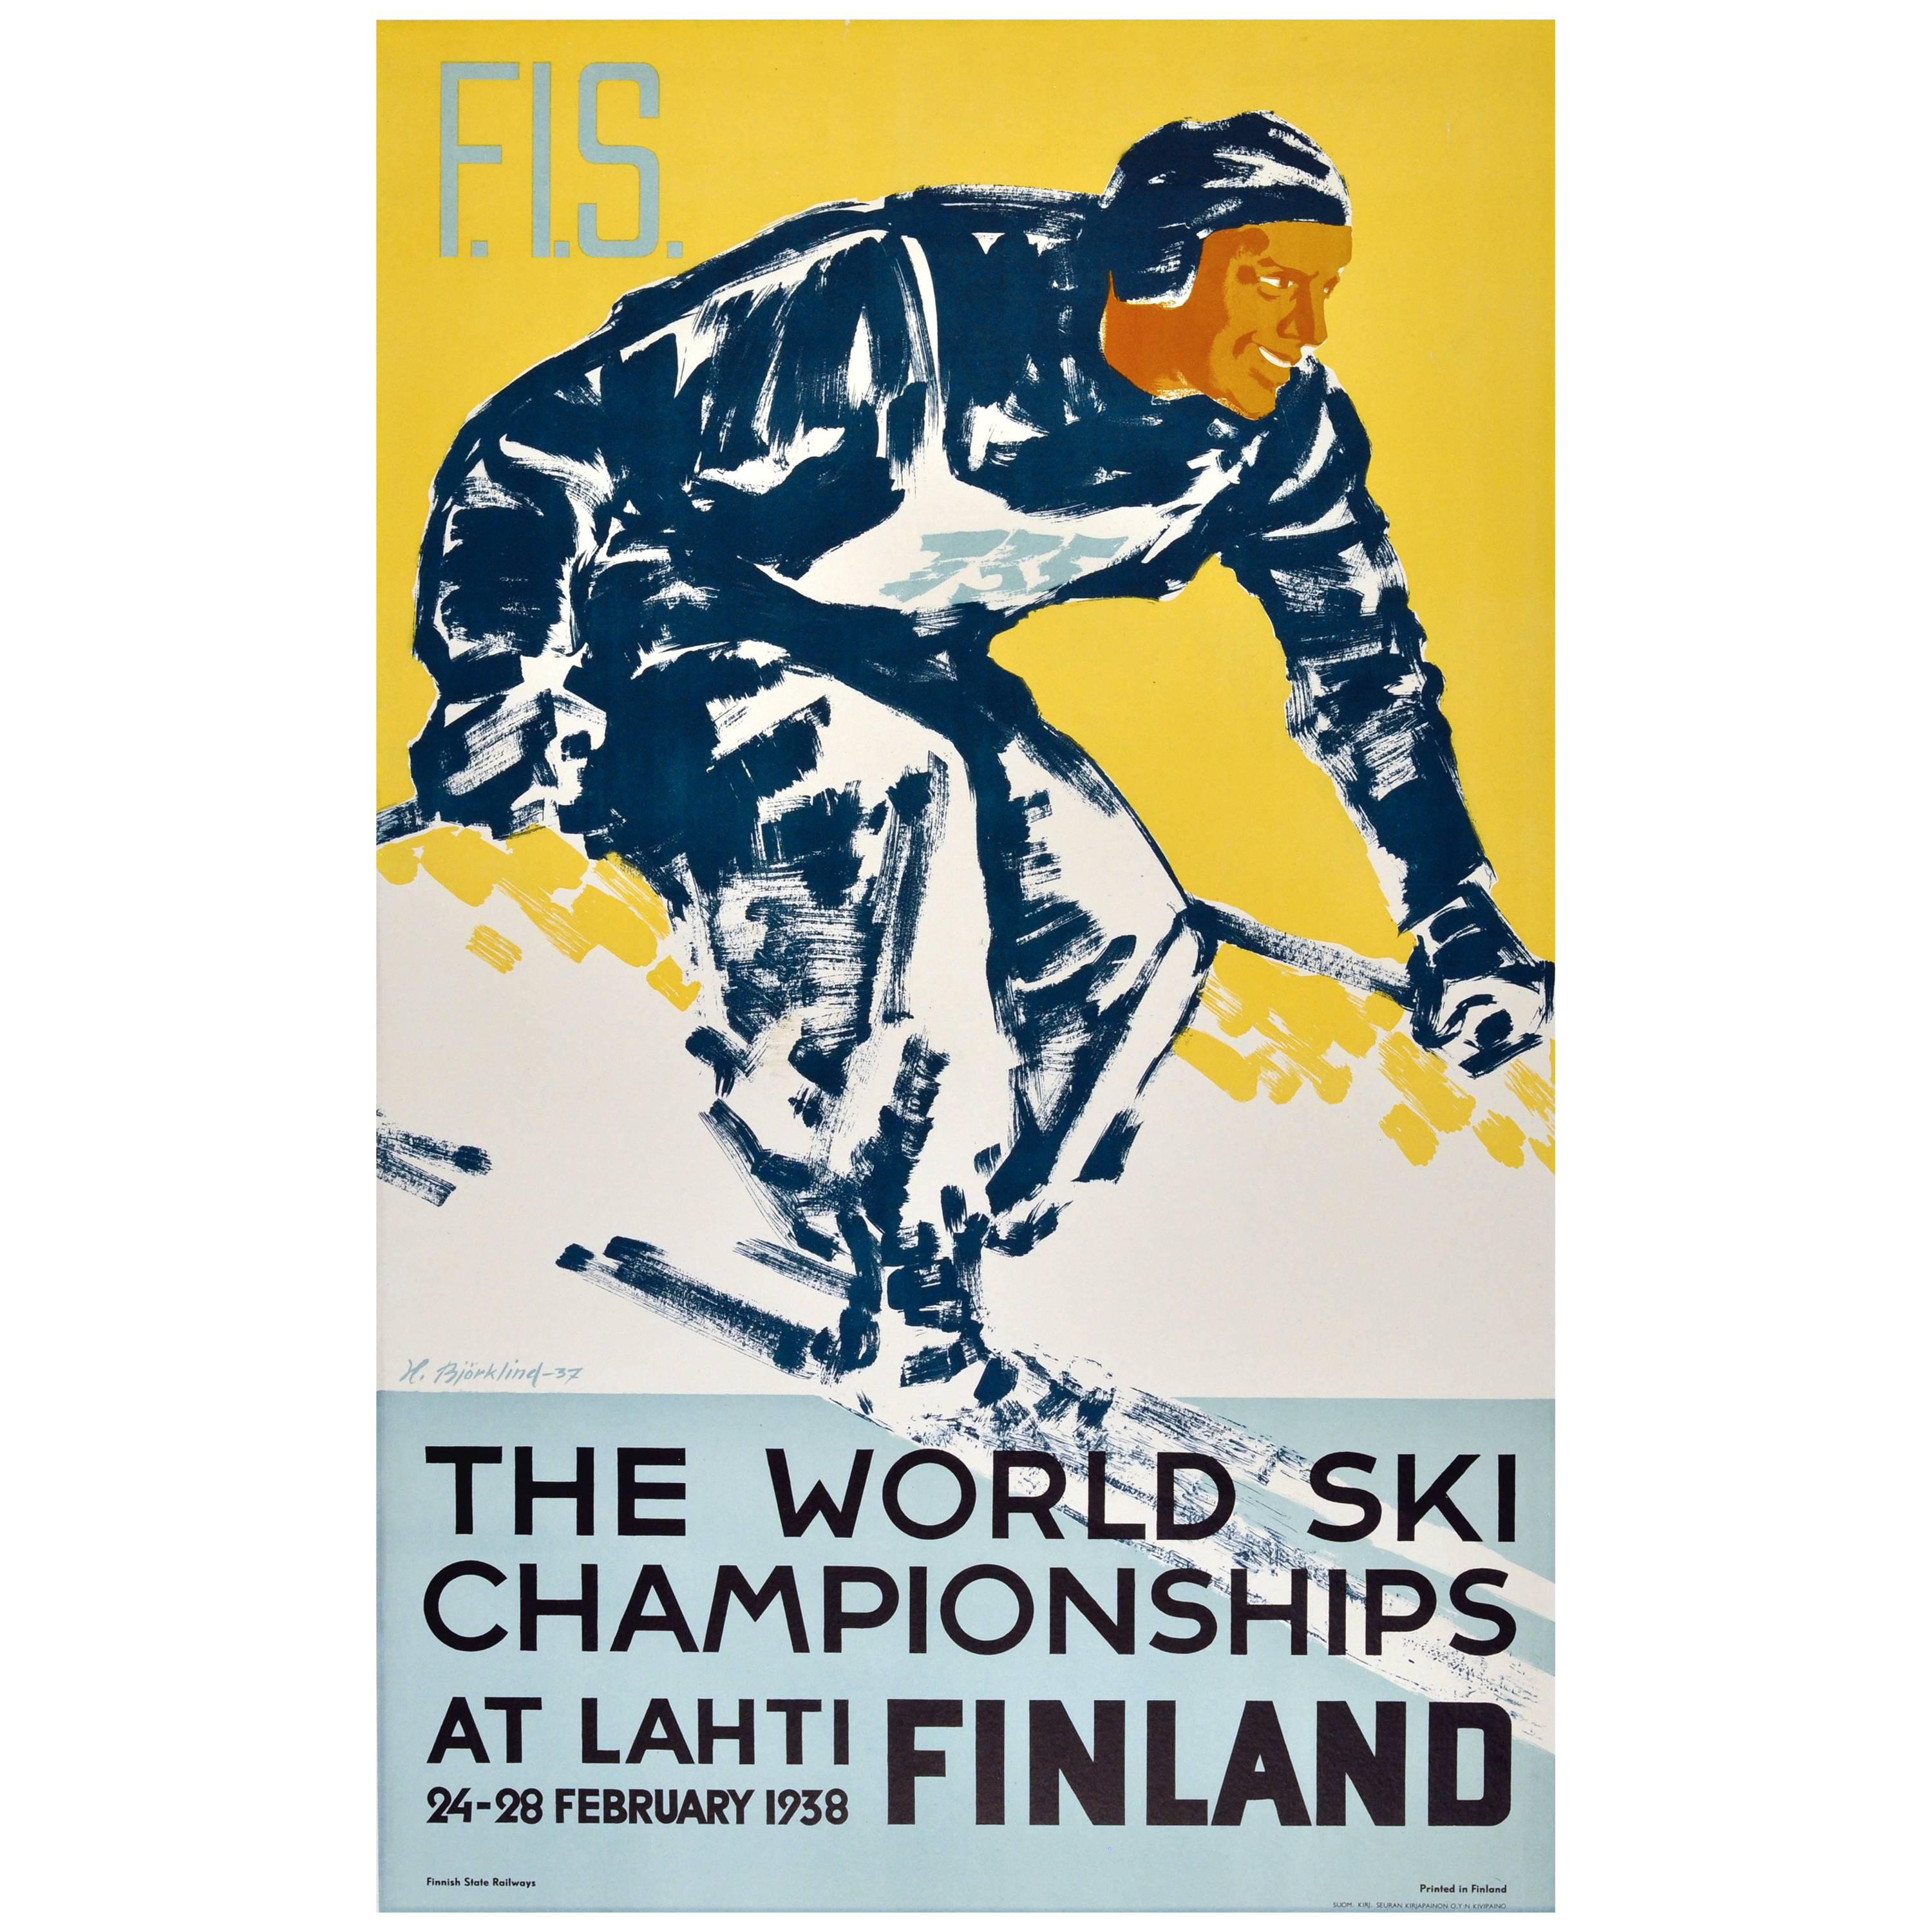 Original Vintage Poster for the 1938 World Ski Championships at Lahti, Finland